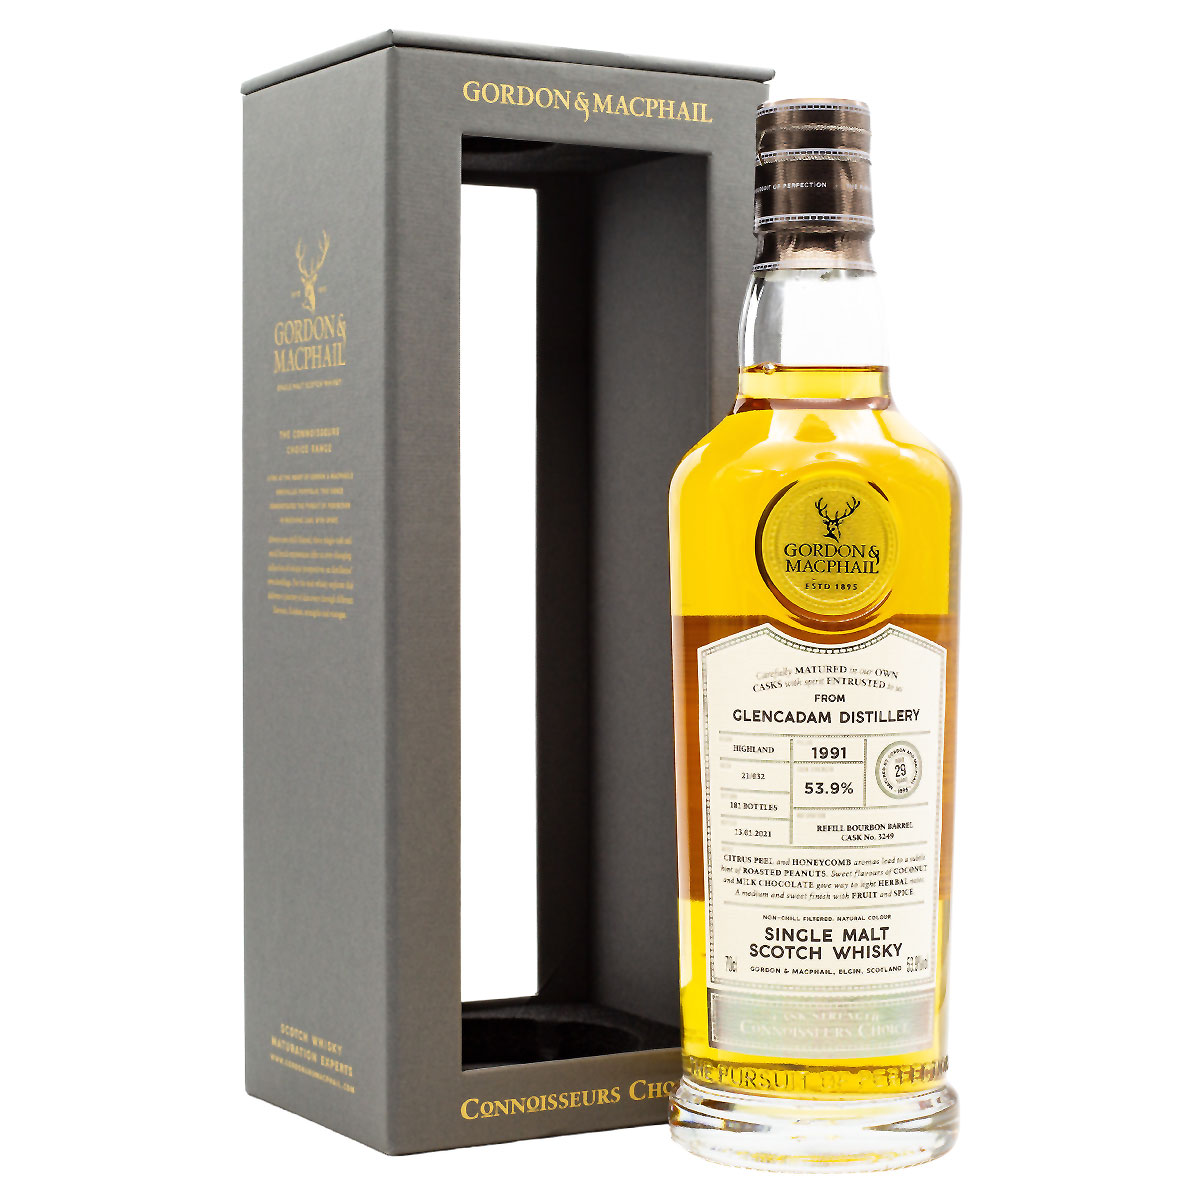 Whisky aus der Connoisseurs Choice: Gordon & MacPhail Glencadam 29 Years Cask 3249